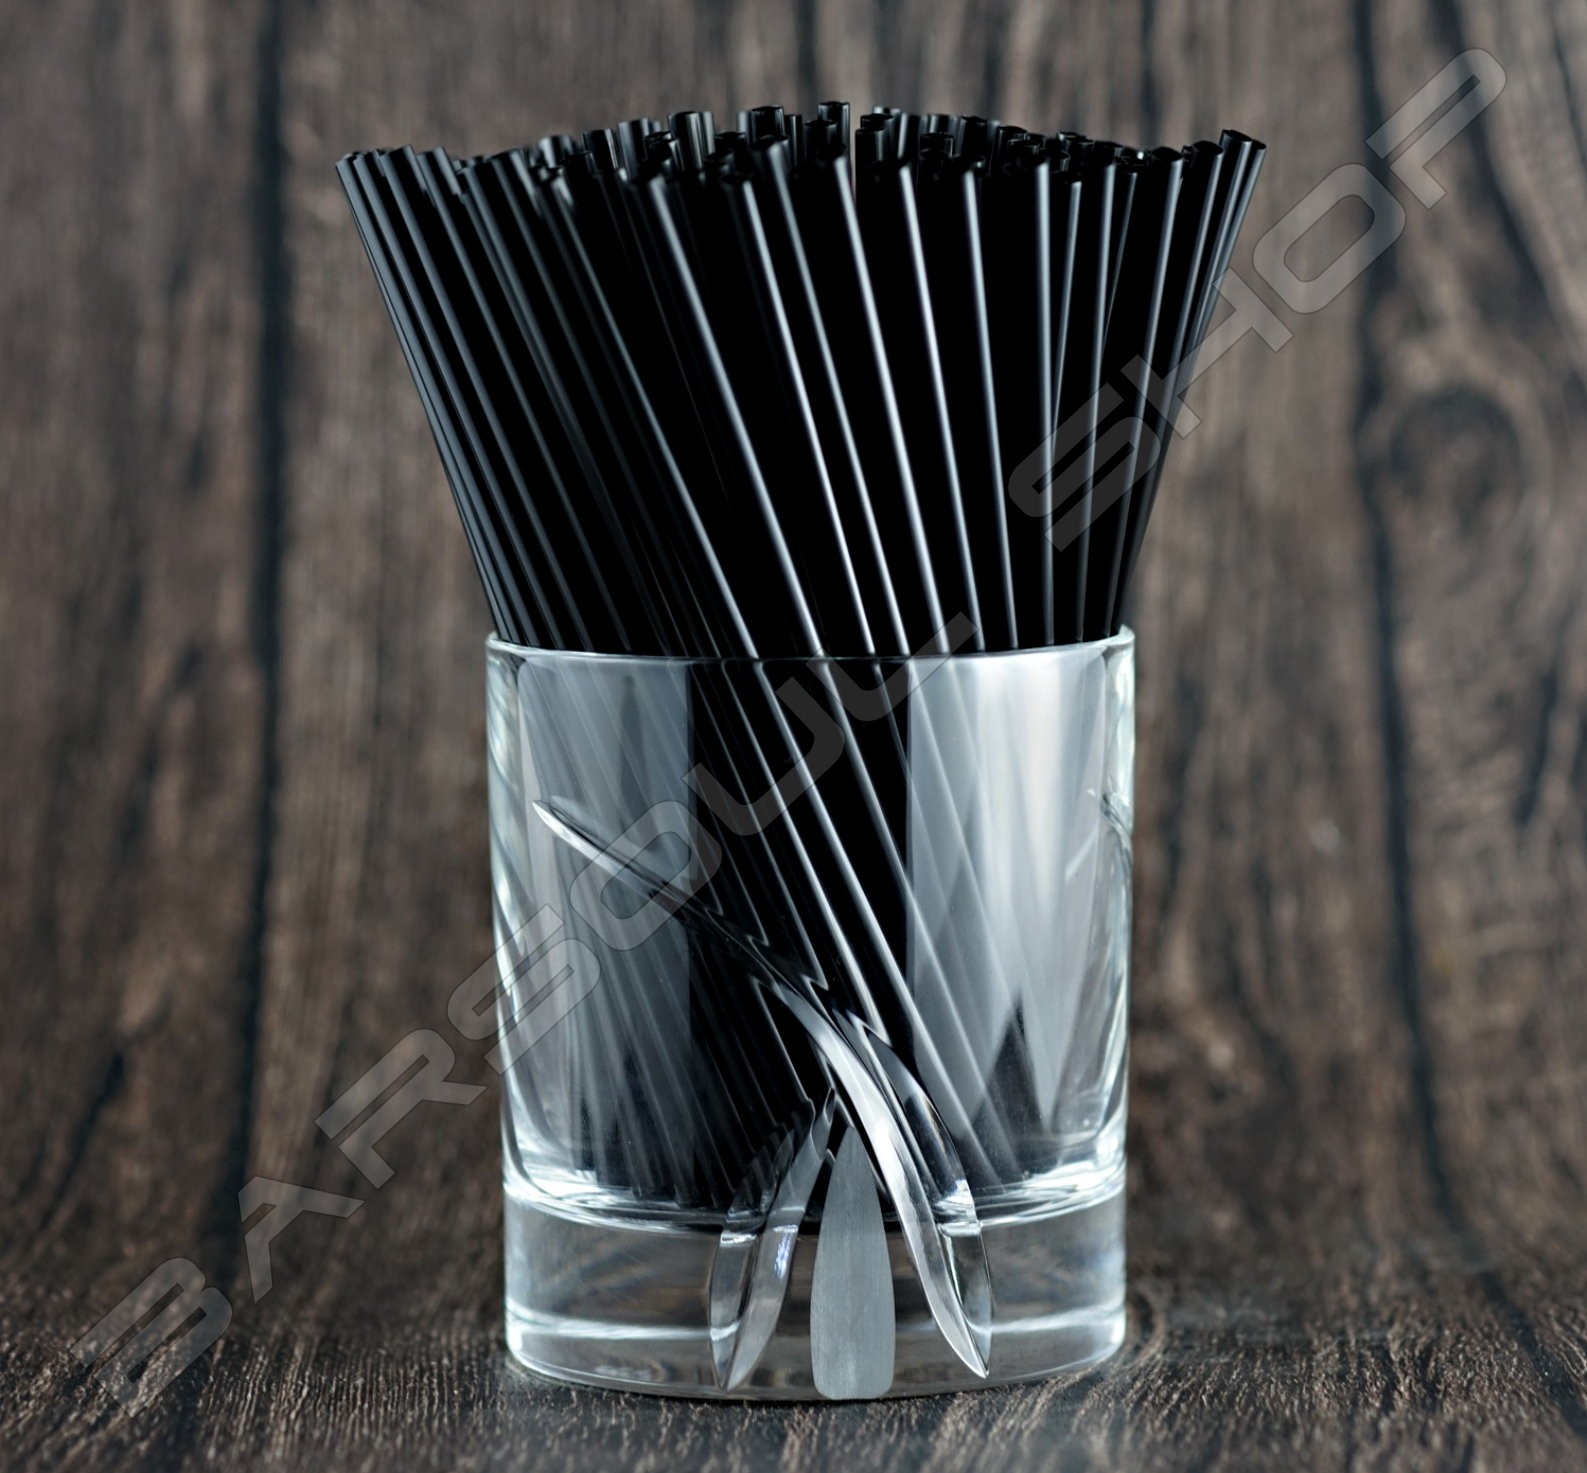 130mm黑色細吸管 Black cocktail straws